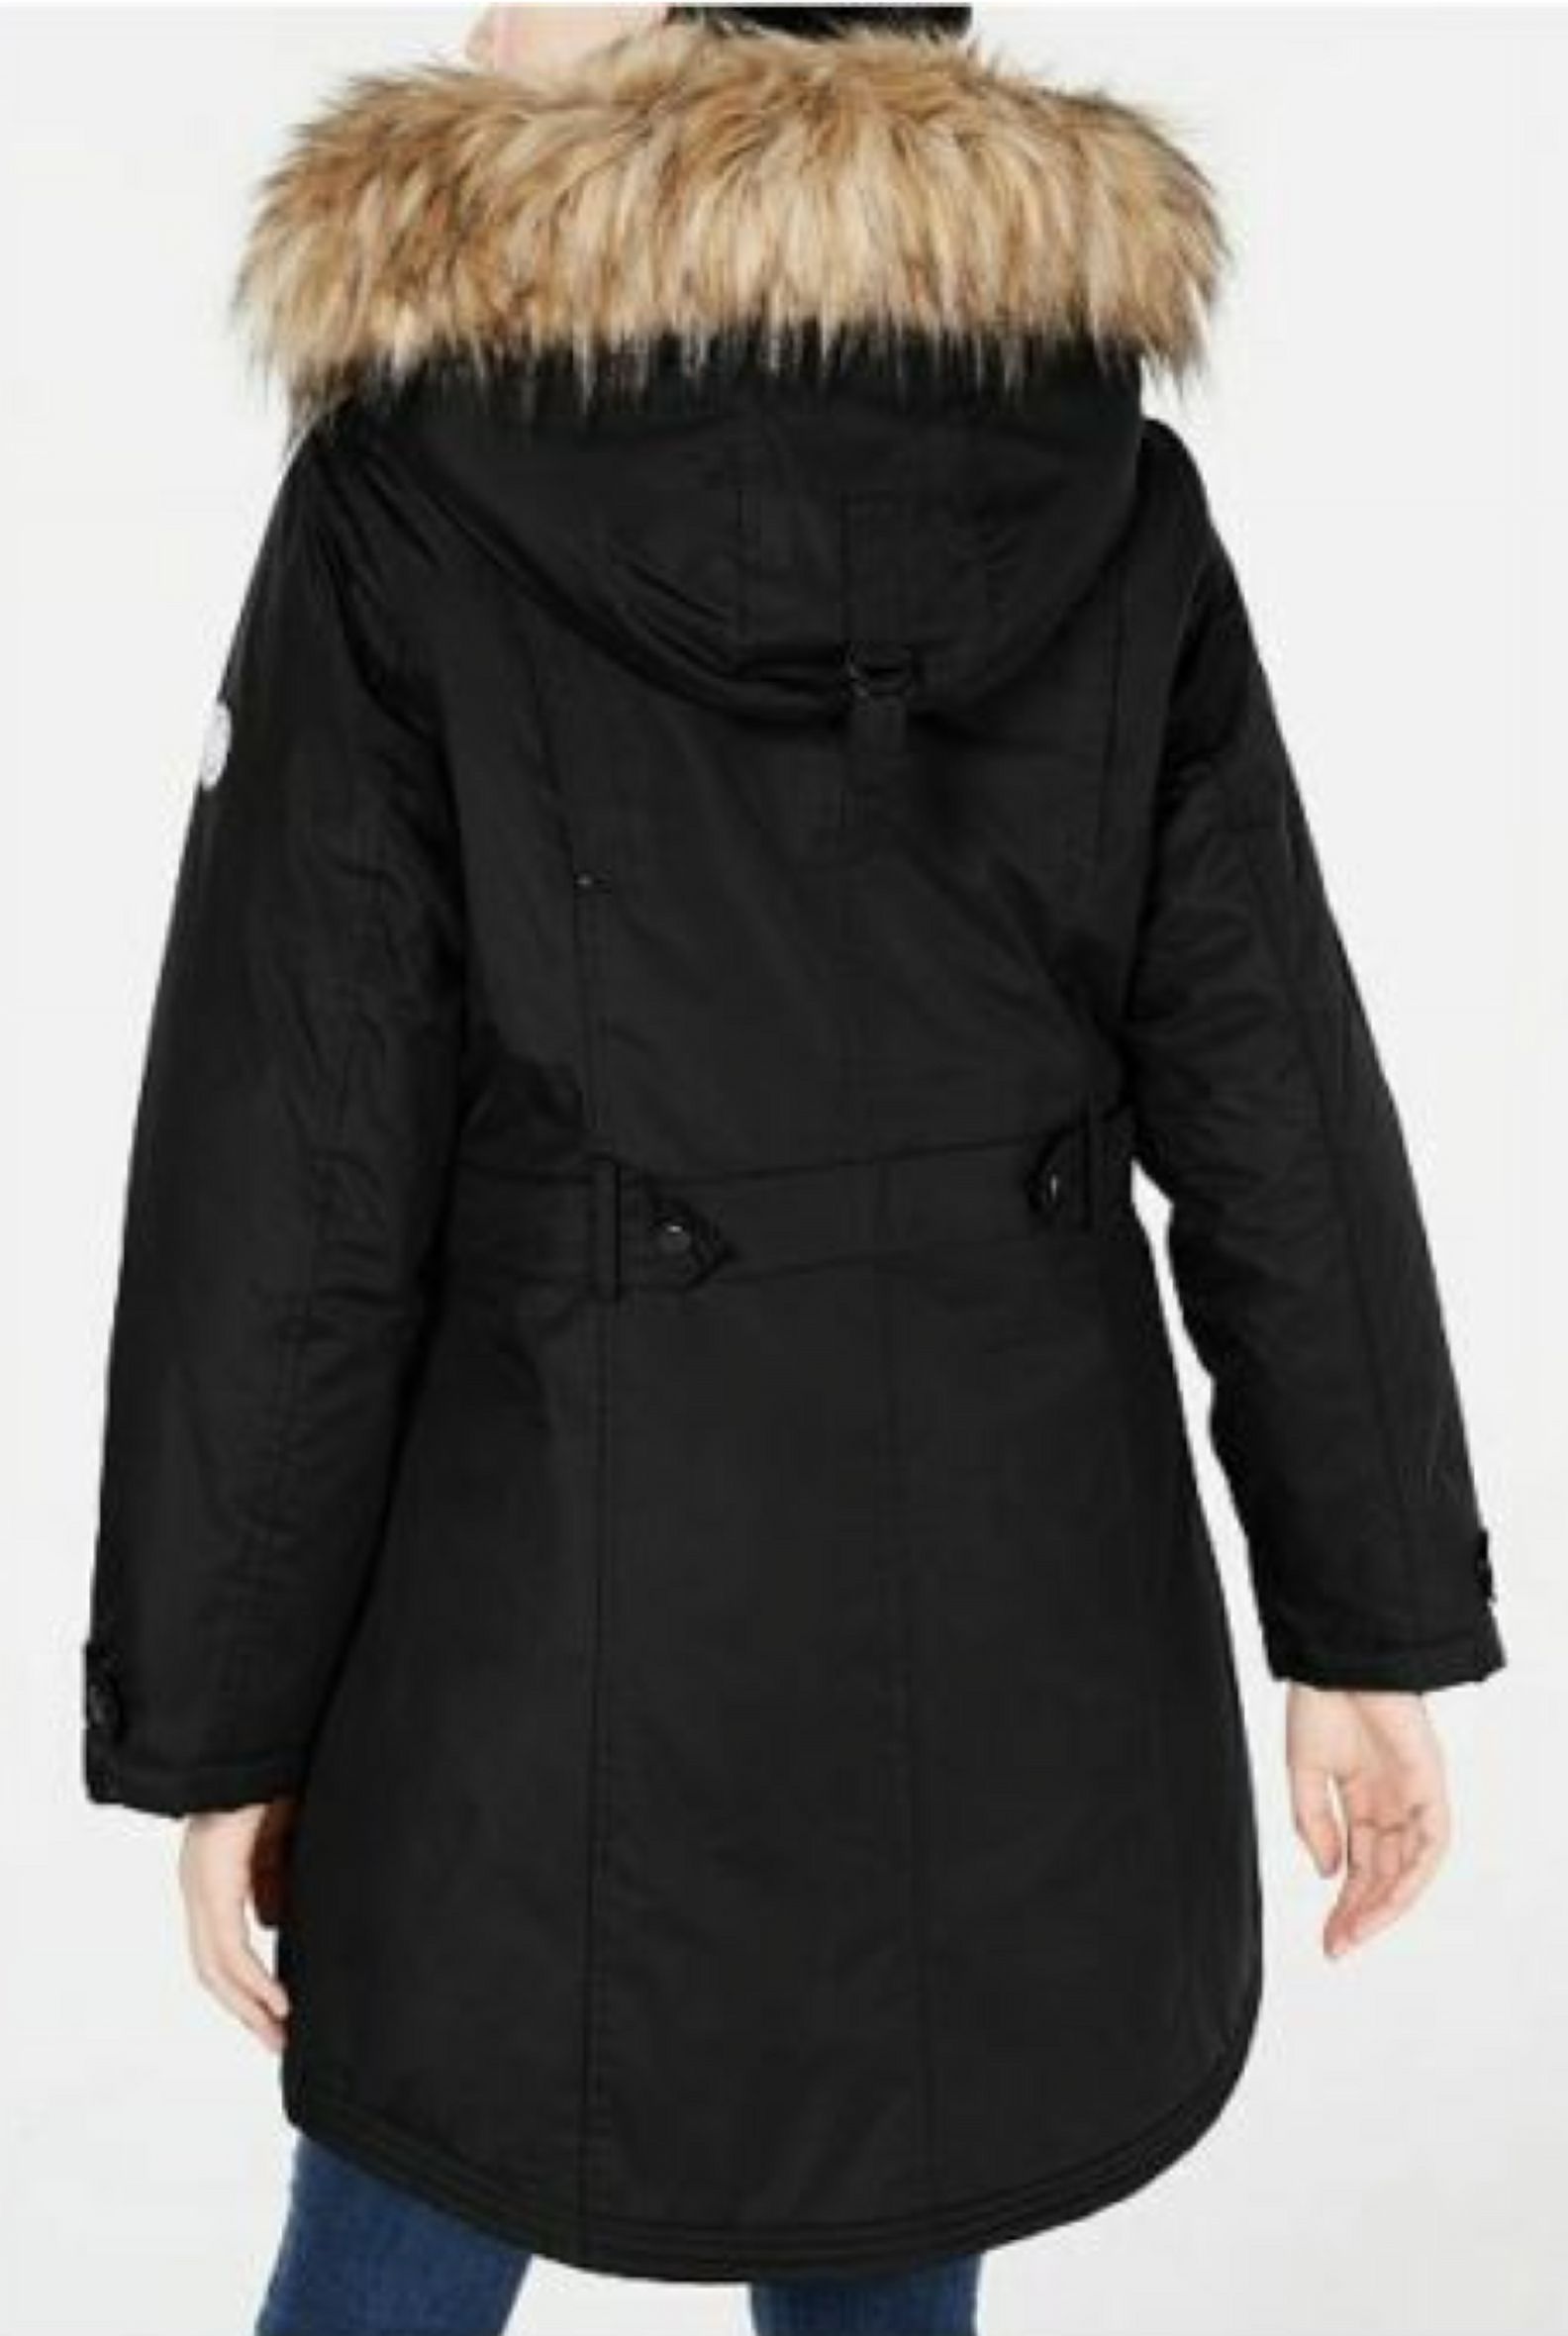 Madden Girl Womens Juniors W Polyester Coat Black XS - image 2 of 4